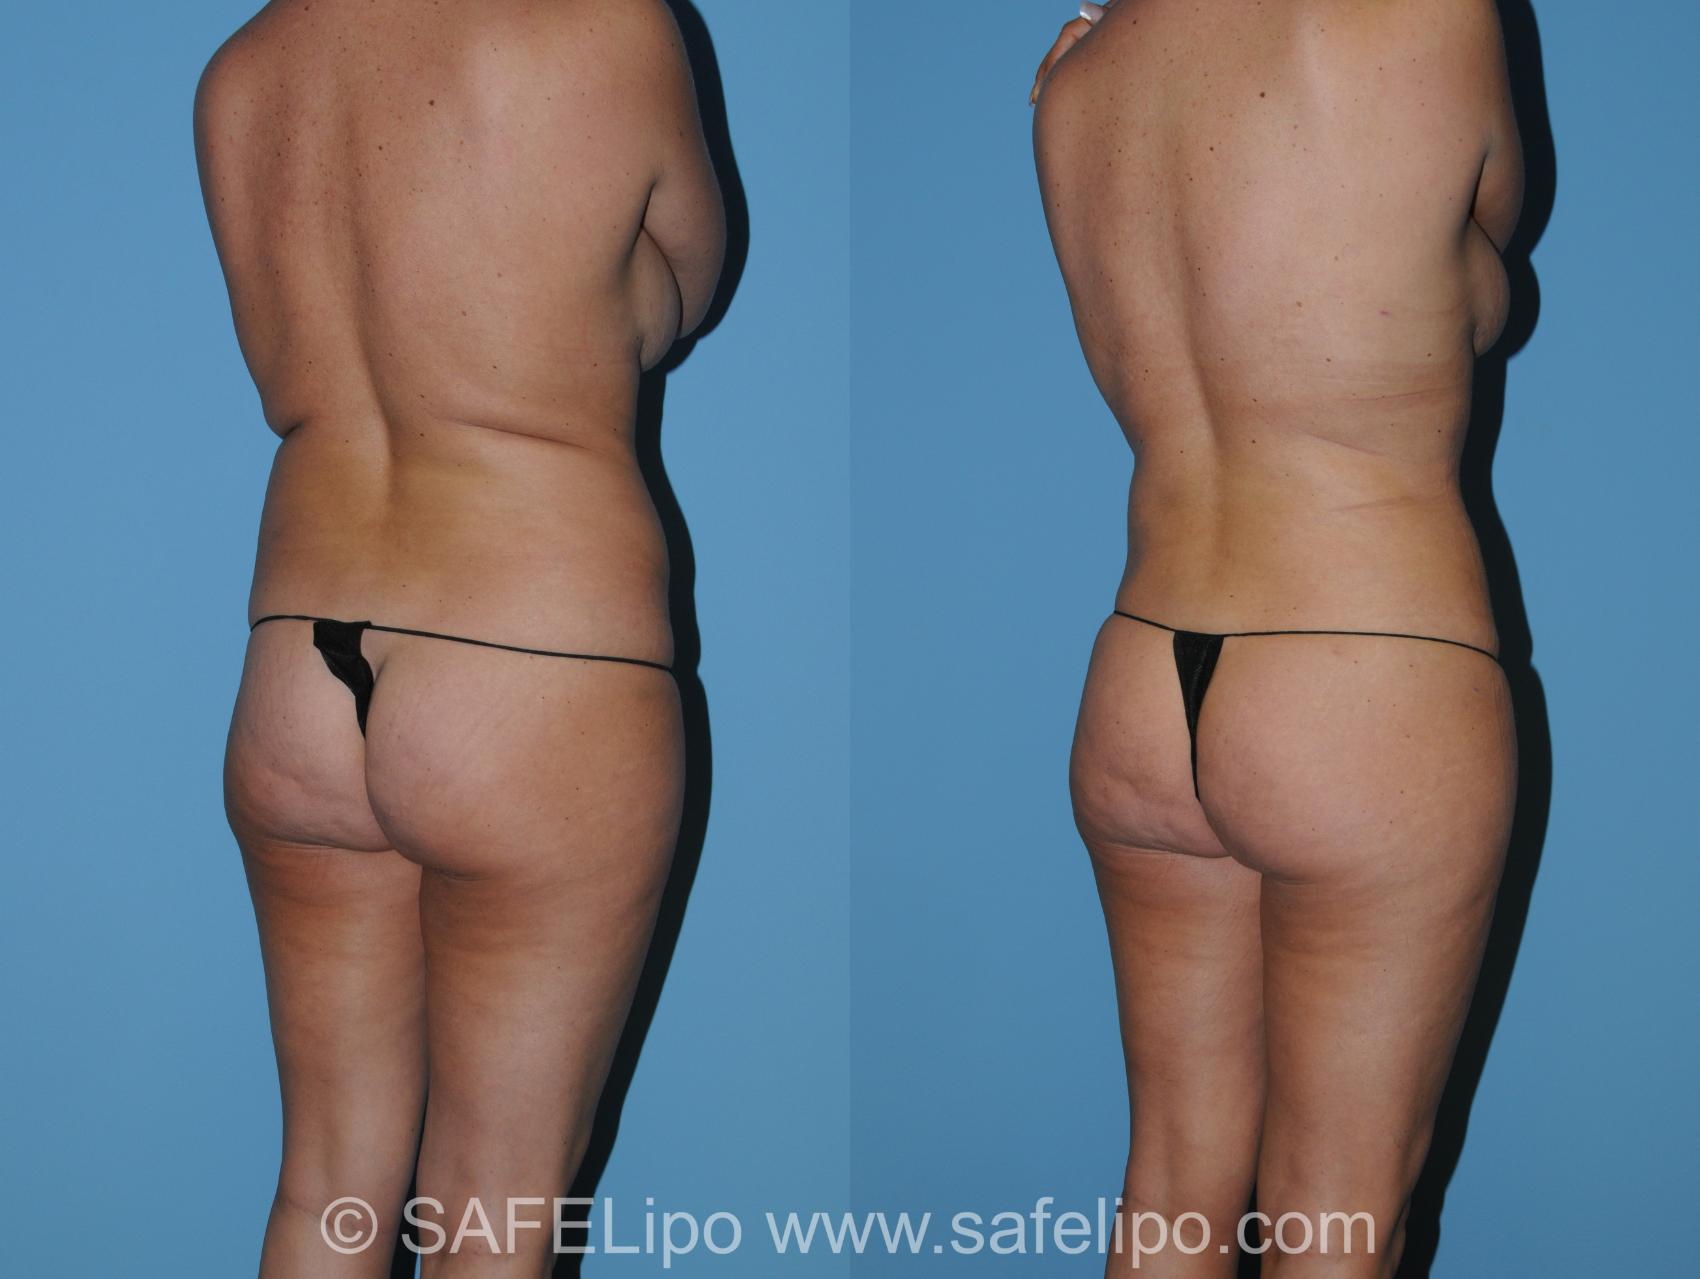 SAFELipo Back Right Oblique Photo, Shreveport, LA, The Wall Center for Plastic Surgery, Case 340